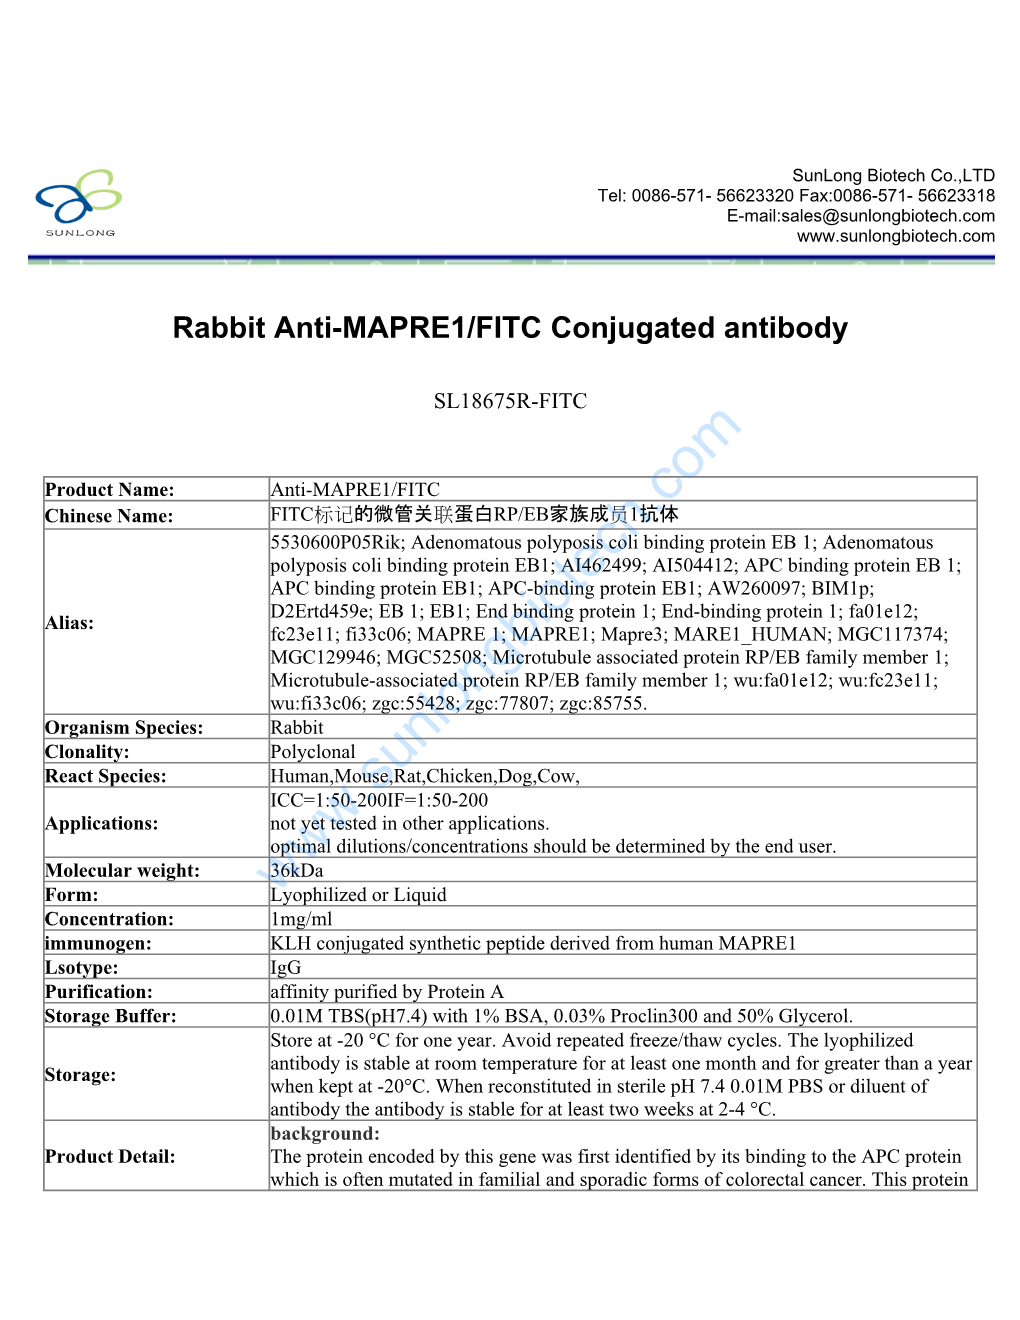 Rabbit Anti-MAPRE1/FITC Conjugated Antibody